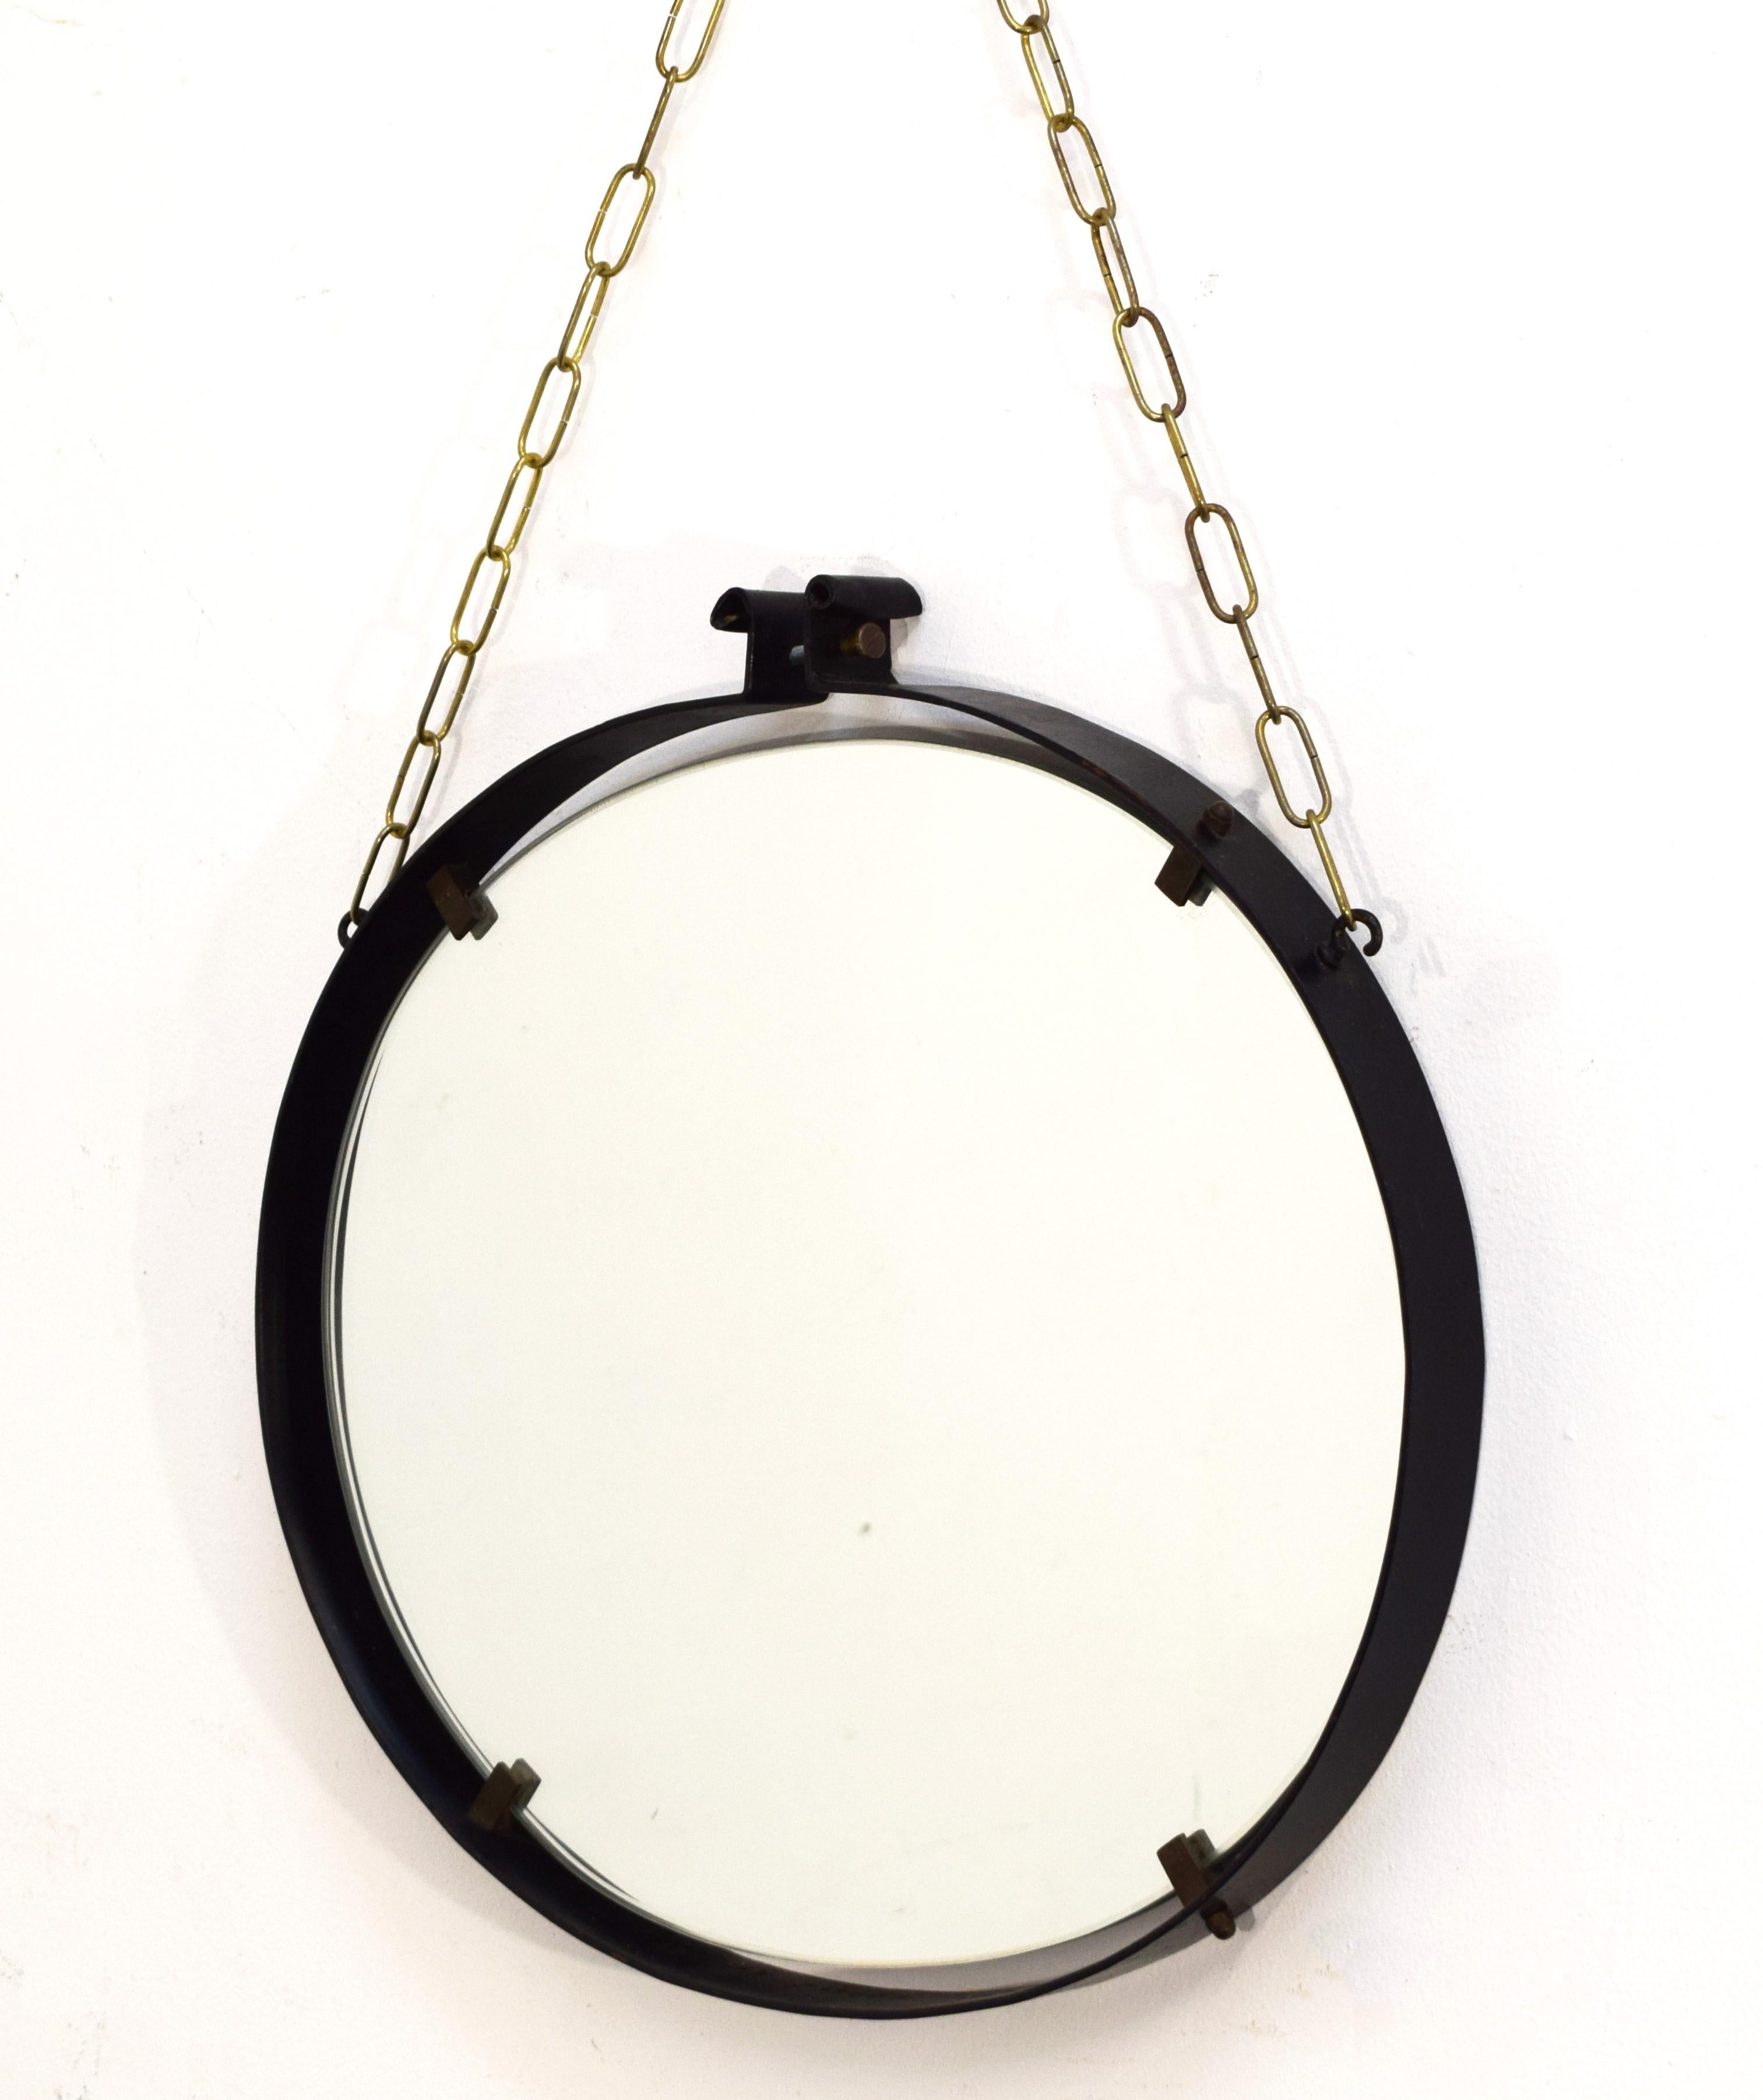 Italian wall mirror, iron, brass and glass, 1960s.
Dimensions:
H total 82 cm. 
Mirror 49x46 cm.
Depth 4 cm.